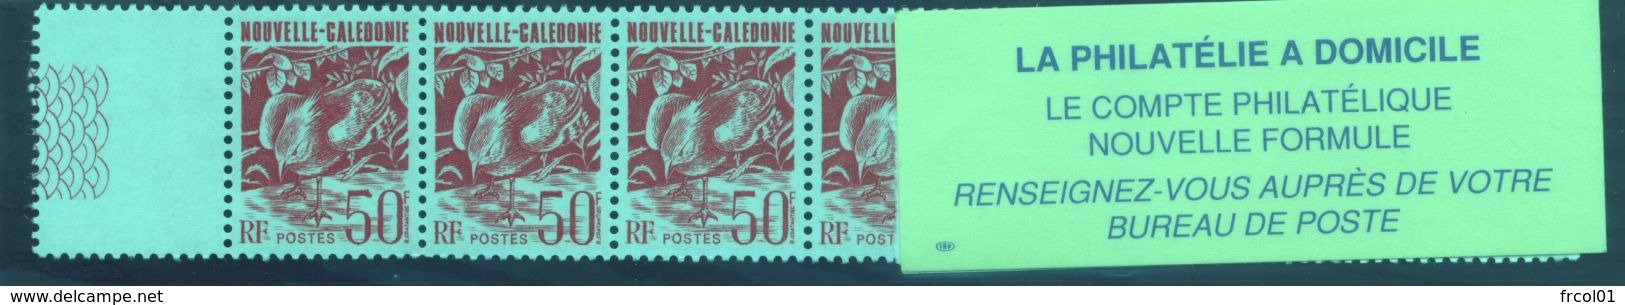 Nouvelle Calédonie, Yvert Carnet 588, Scott Booklet 599, MNH - Libretti